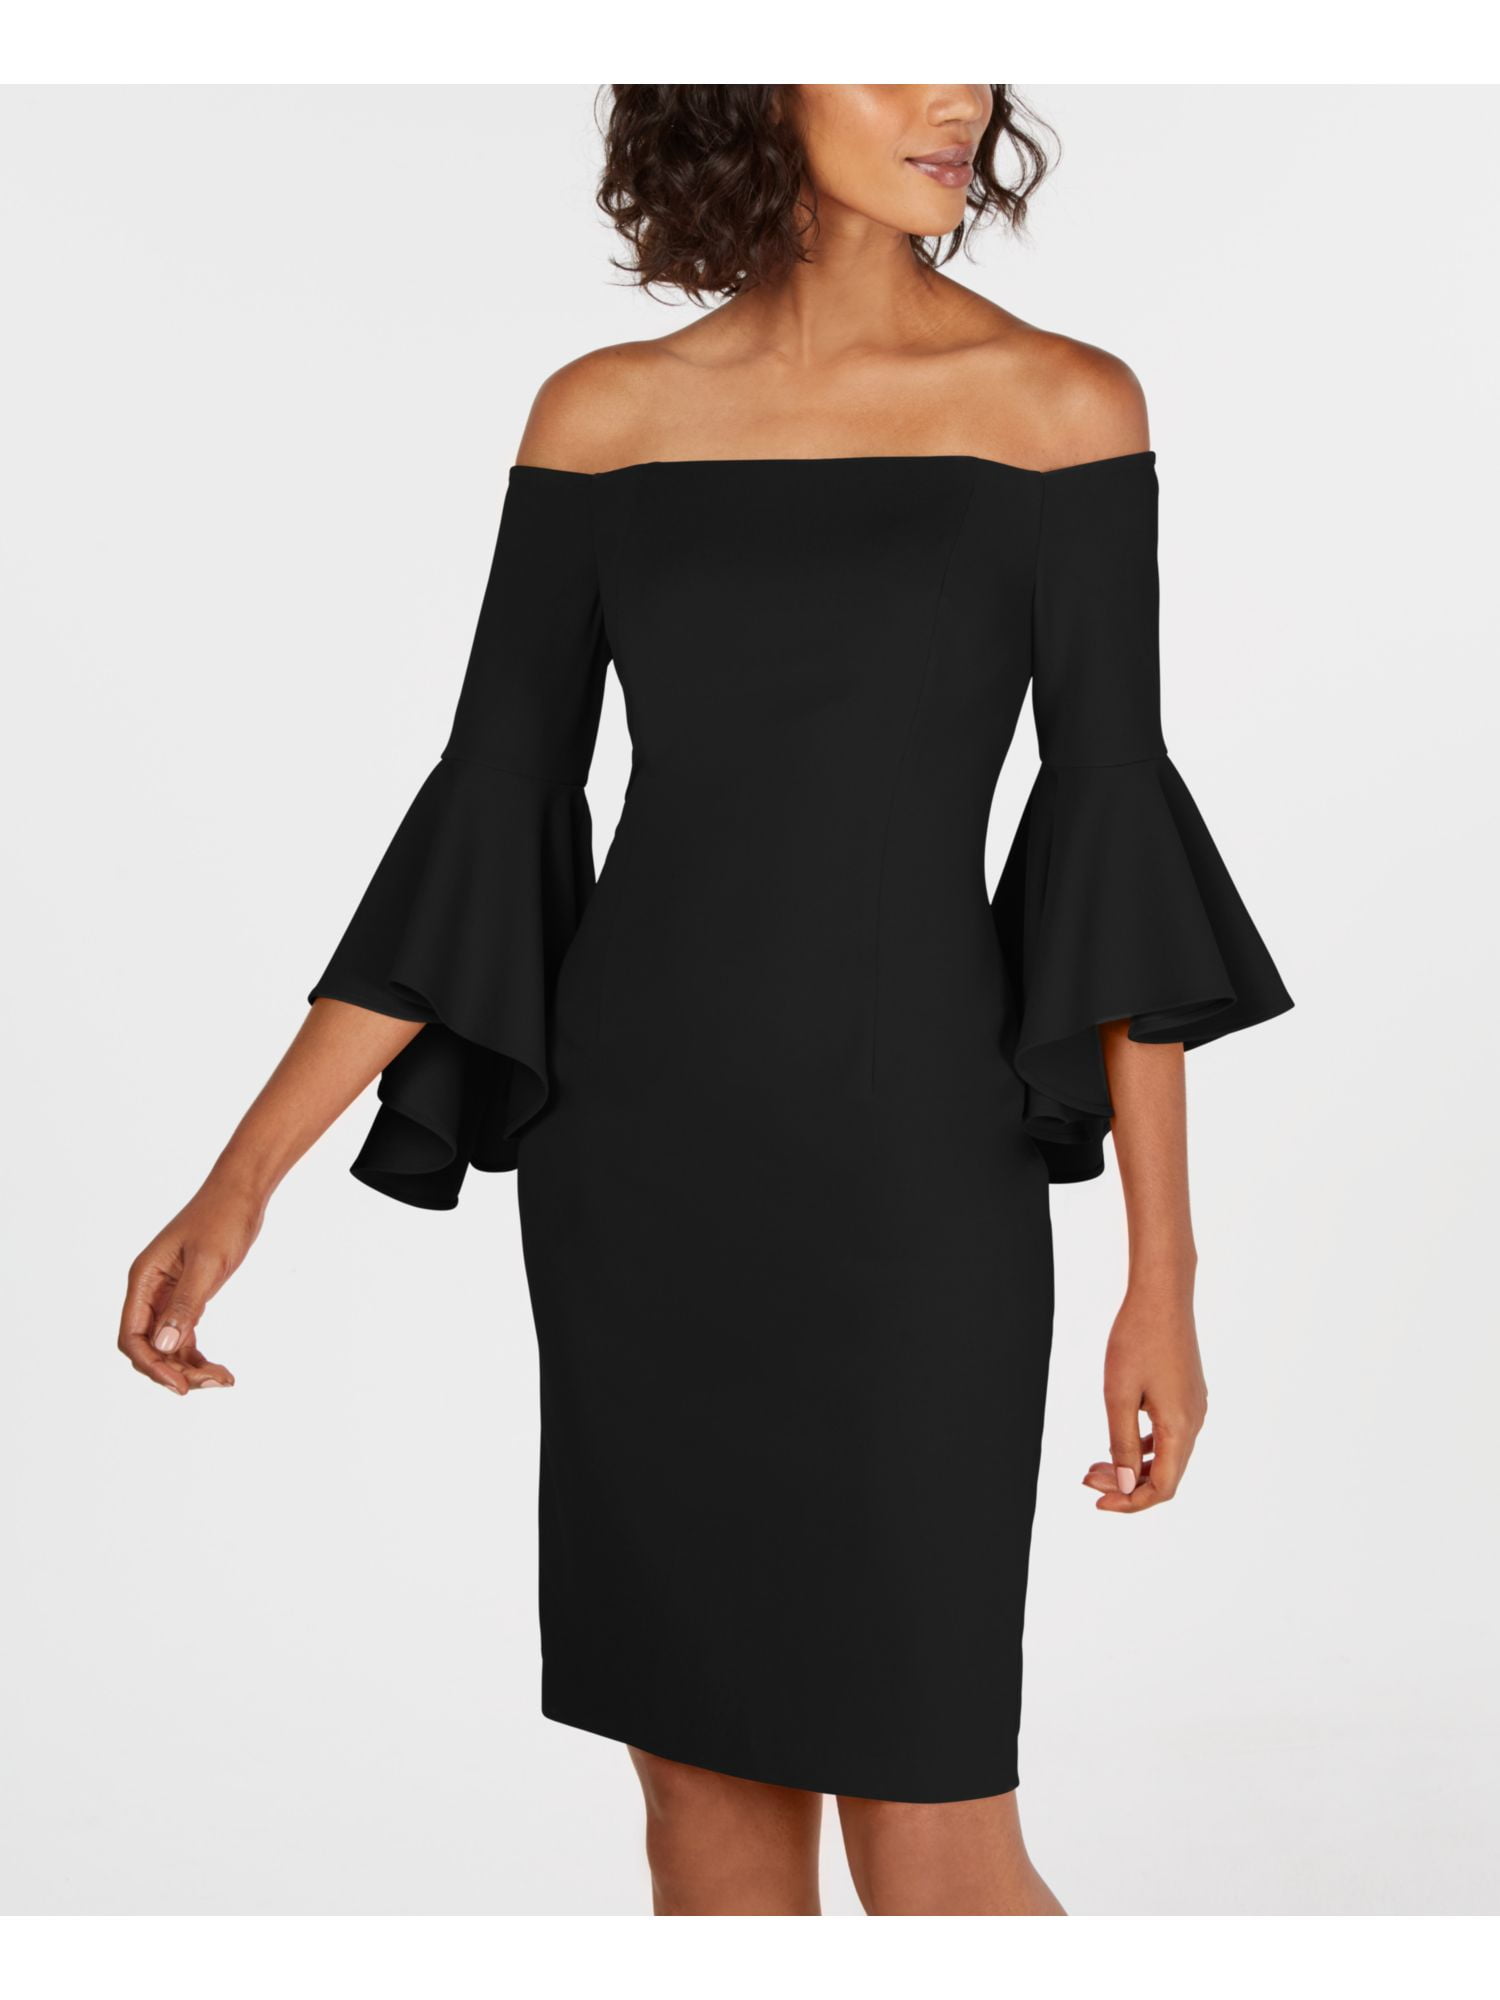 CALVIN KLEIN Womens Black Bell Sleeve Body Con Evening Dress Petites 8P -  